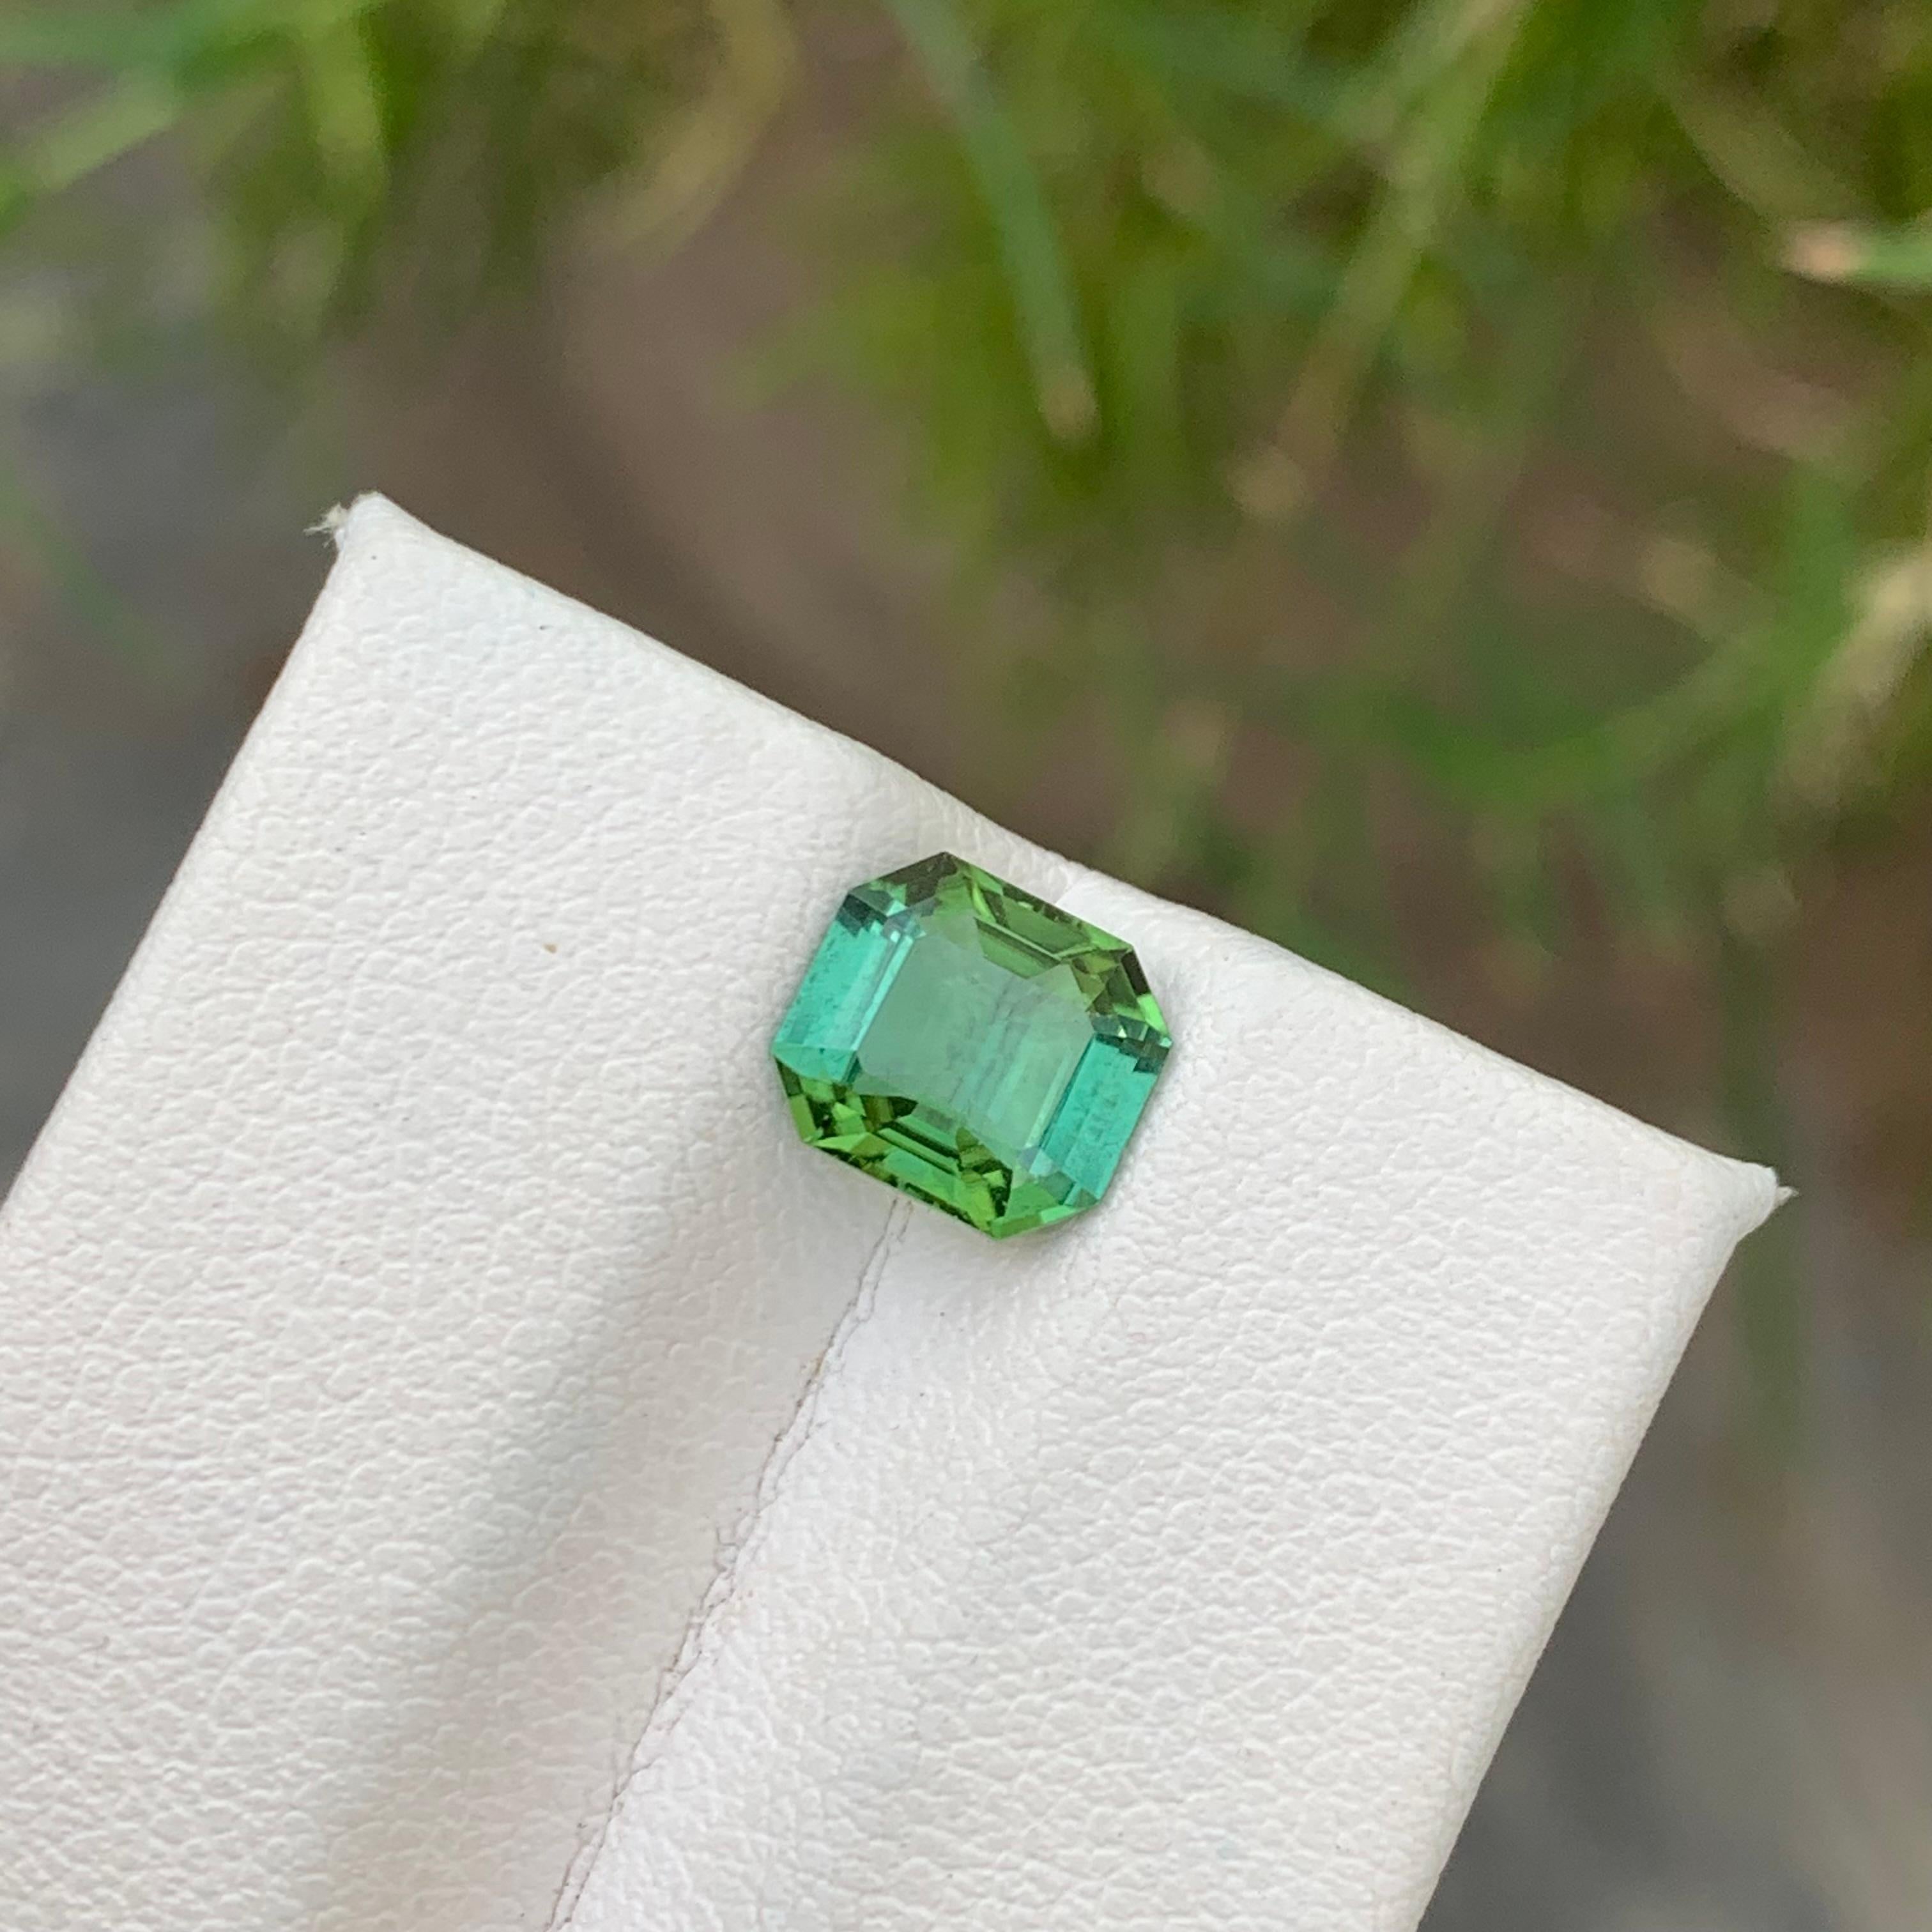 Gorgeous 1.65 Carat Mint Green Tourmaline Emerald Cut Ring Gem from Afghanistan 1